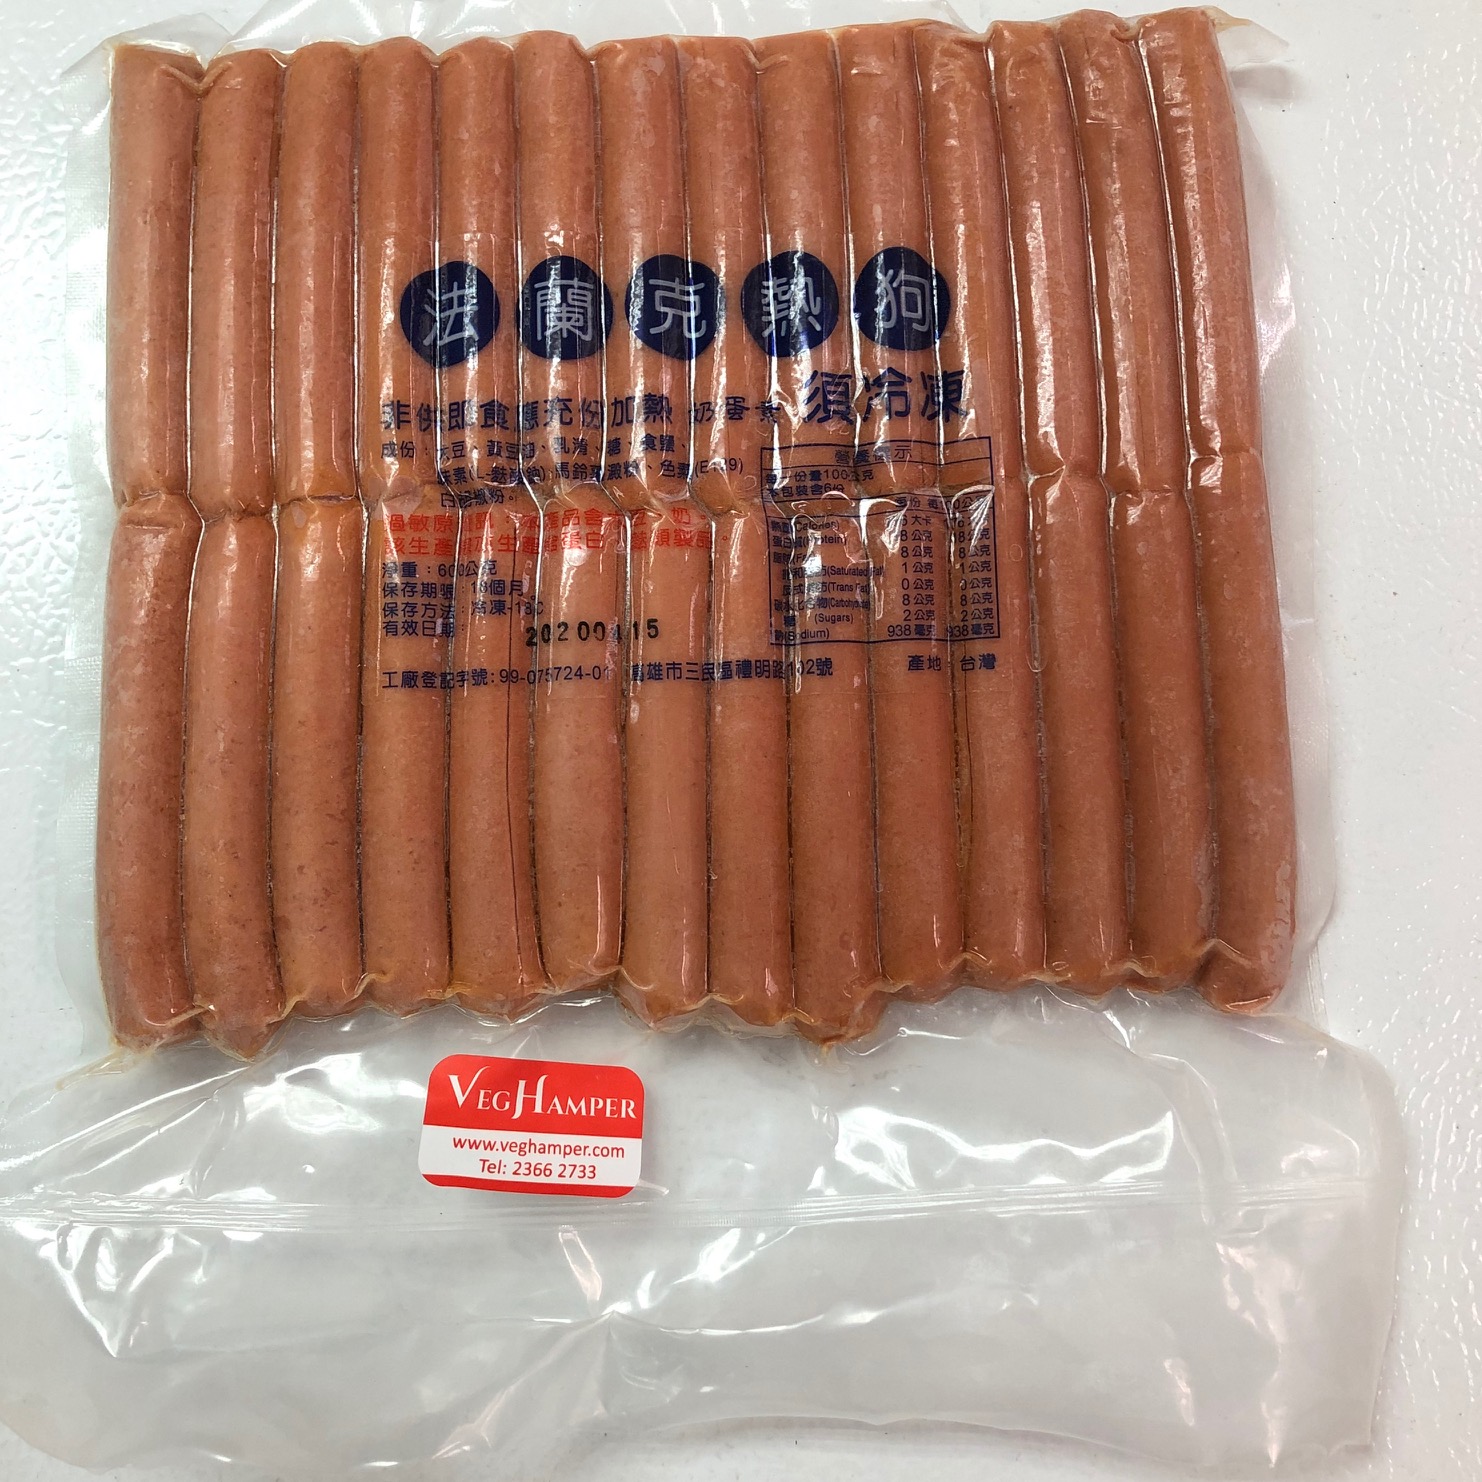 Vegerarian Hot Dog (600g/pack)(ovo) - Click Image to Close